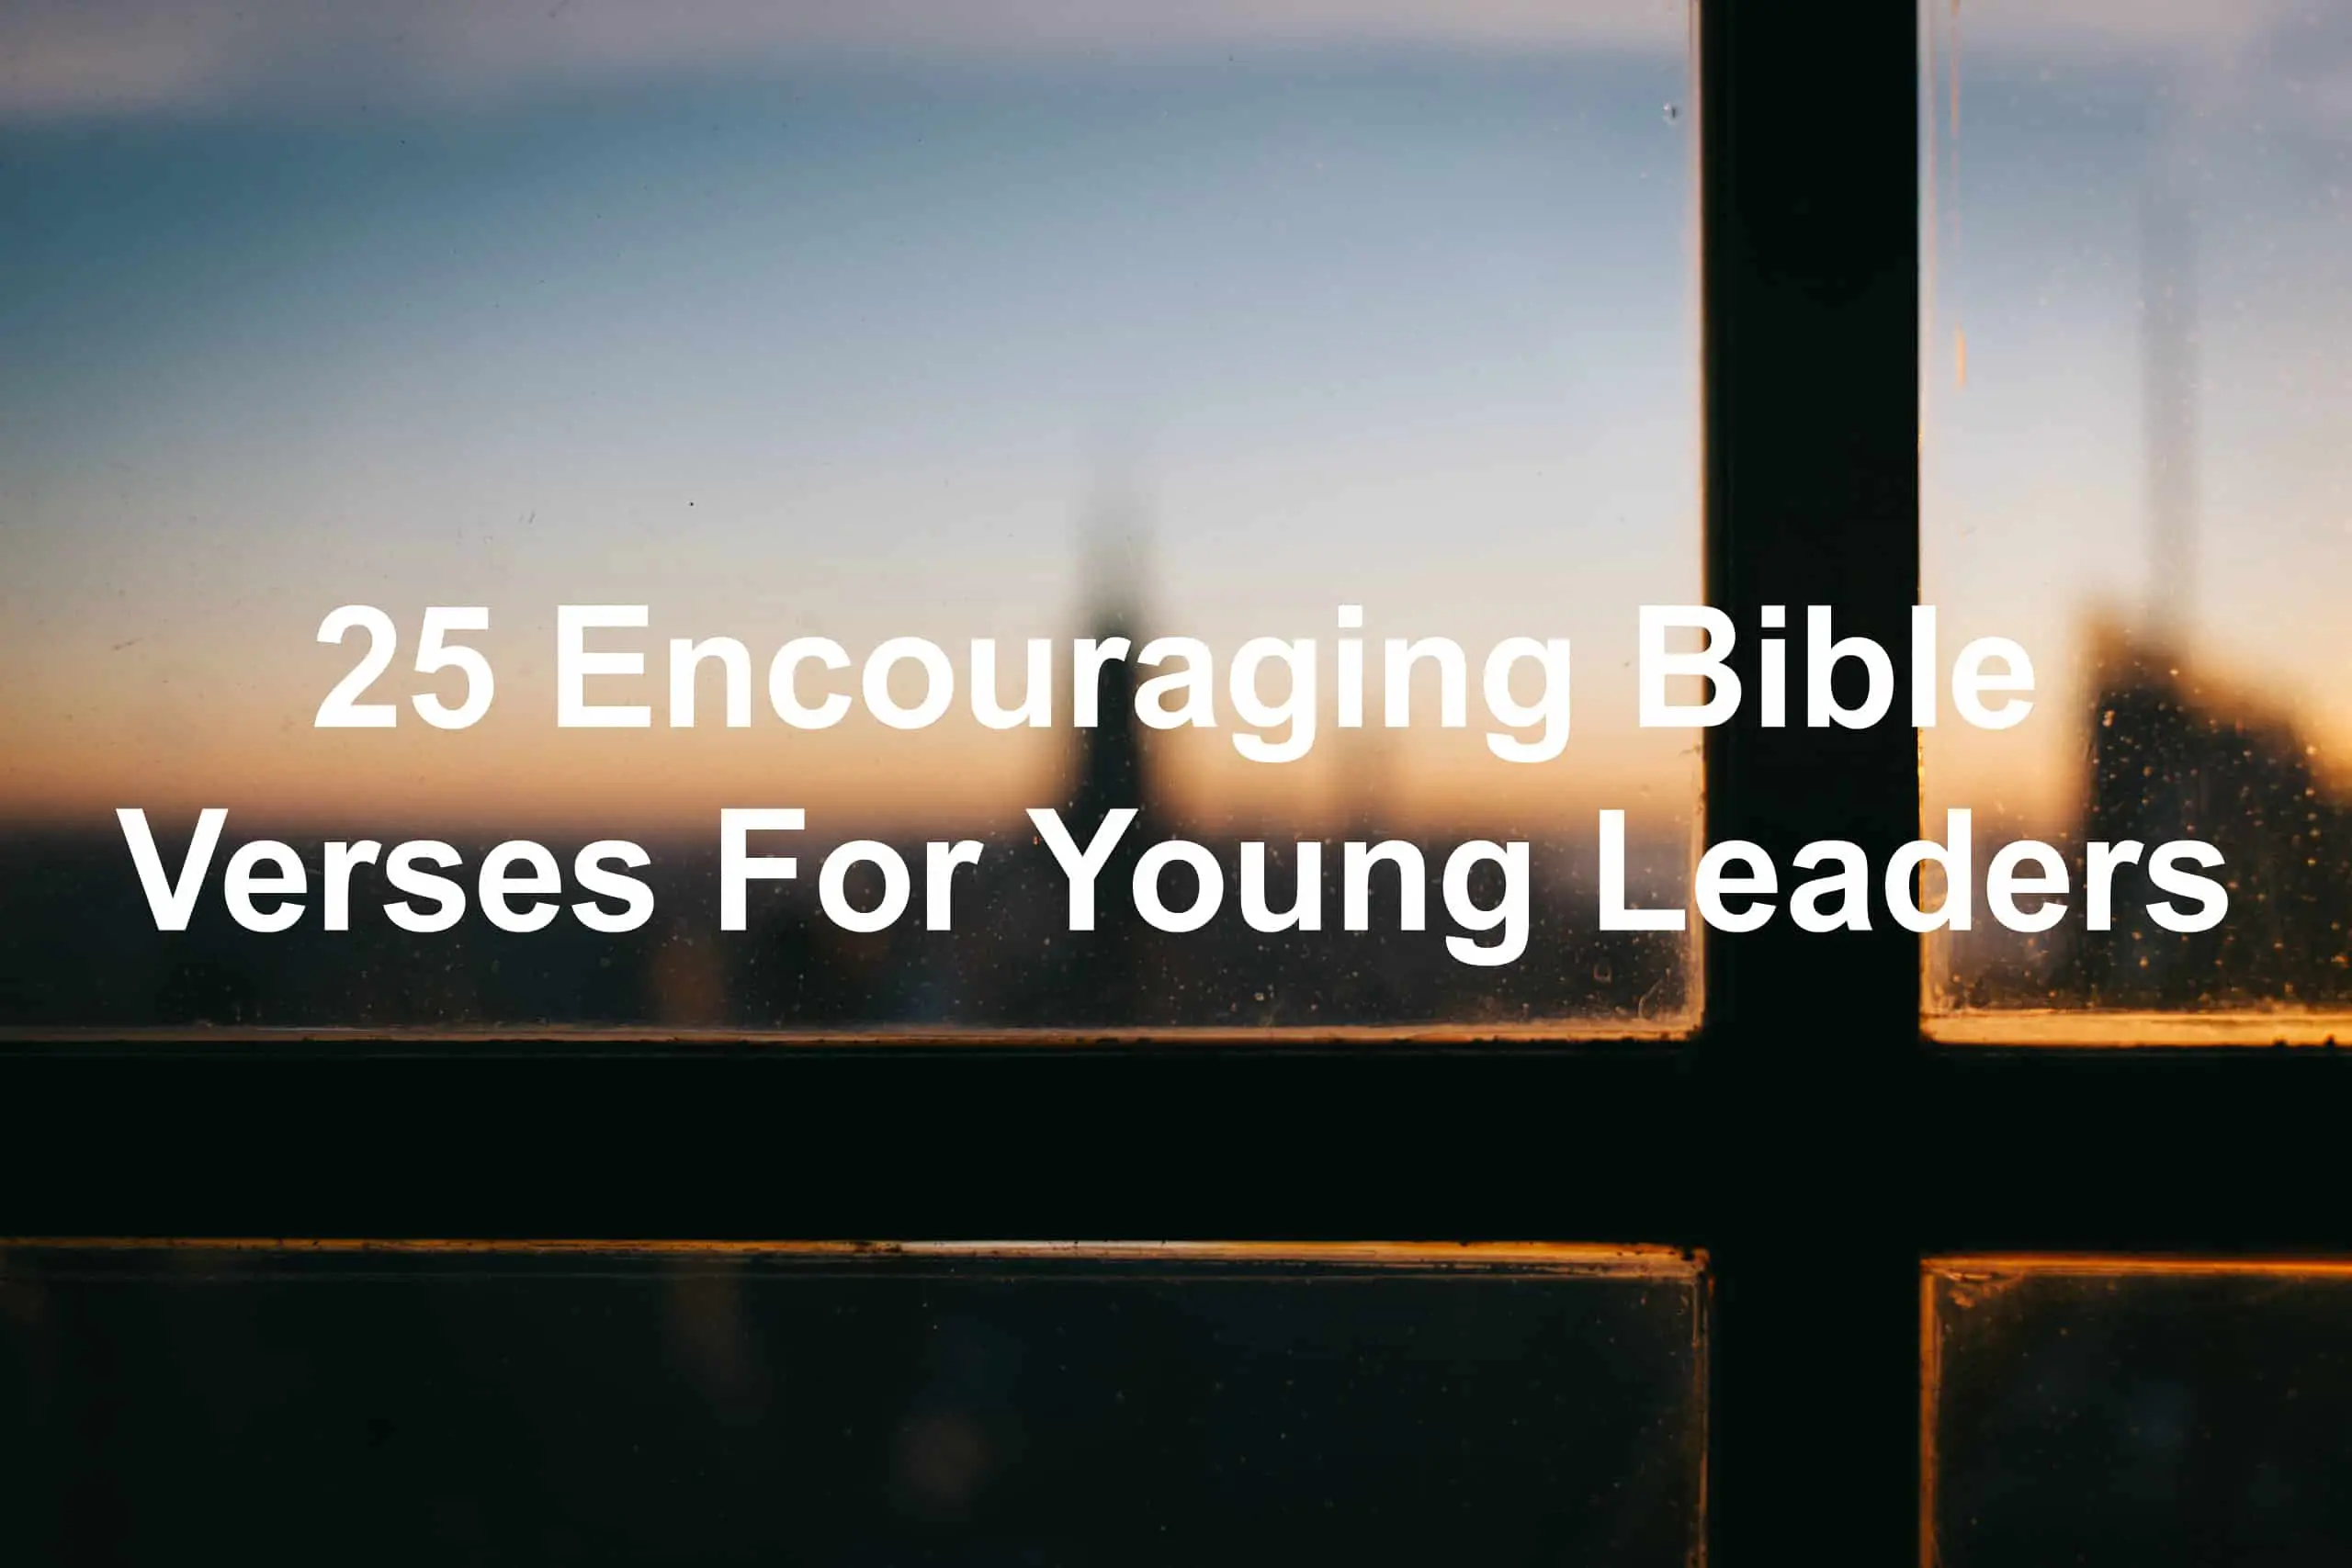 Bible verses to encourage leaders